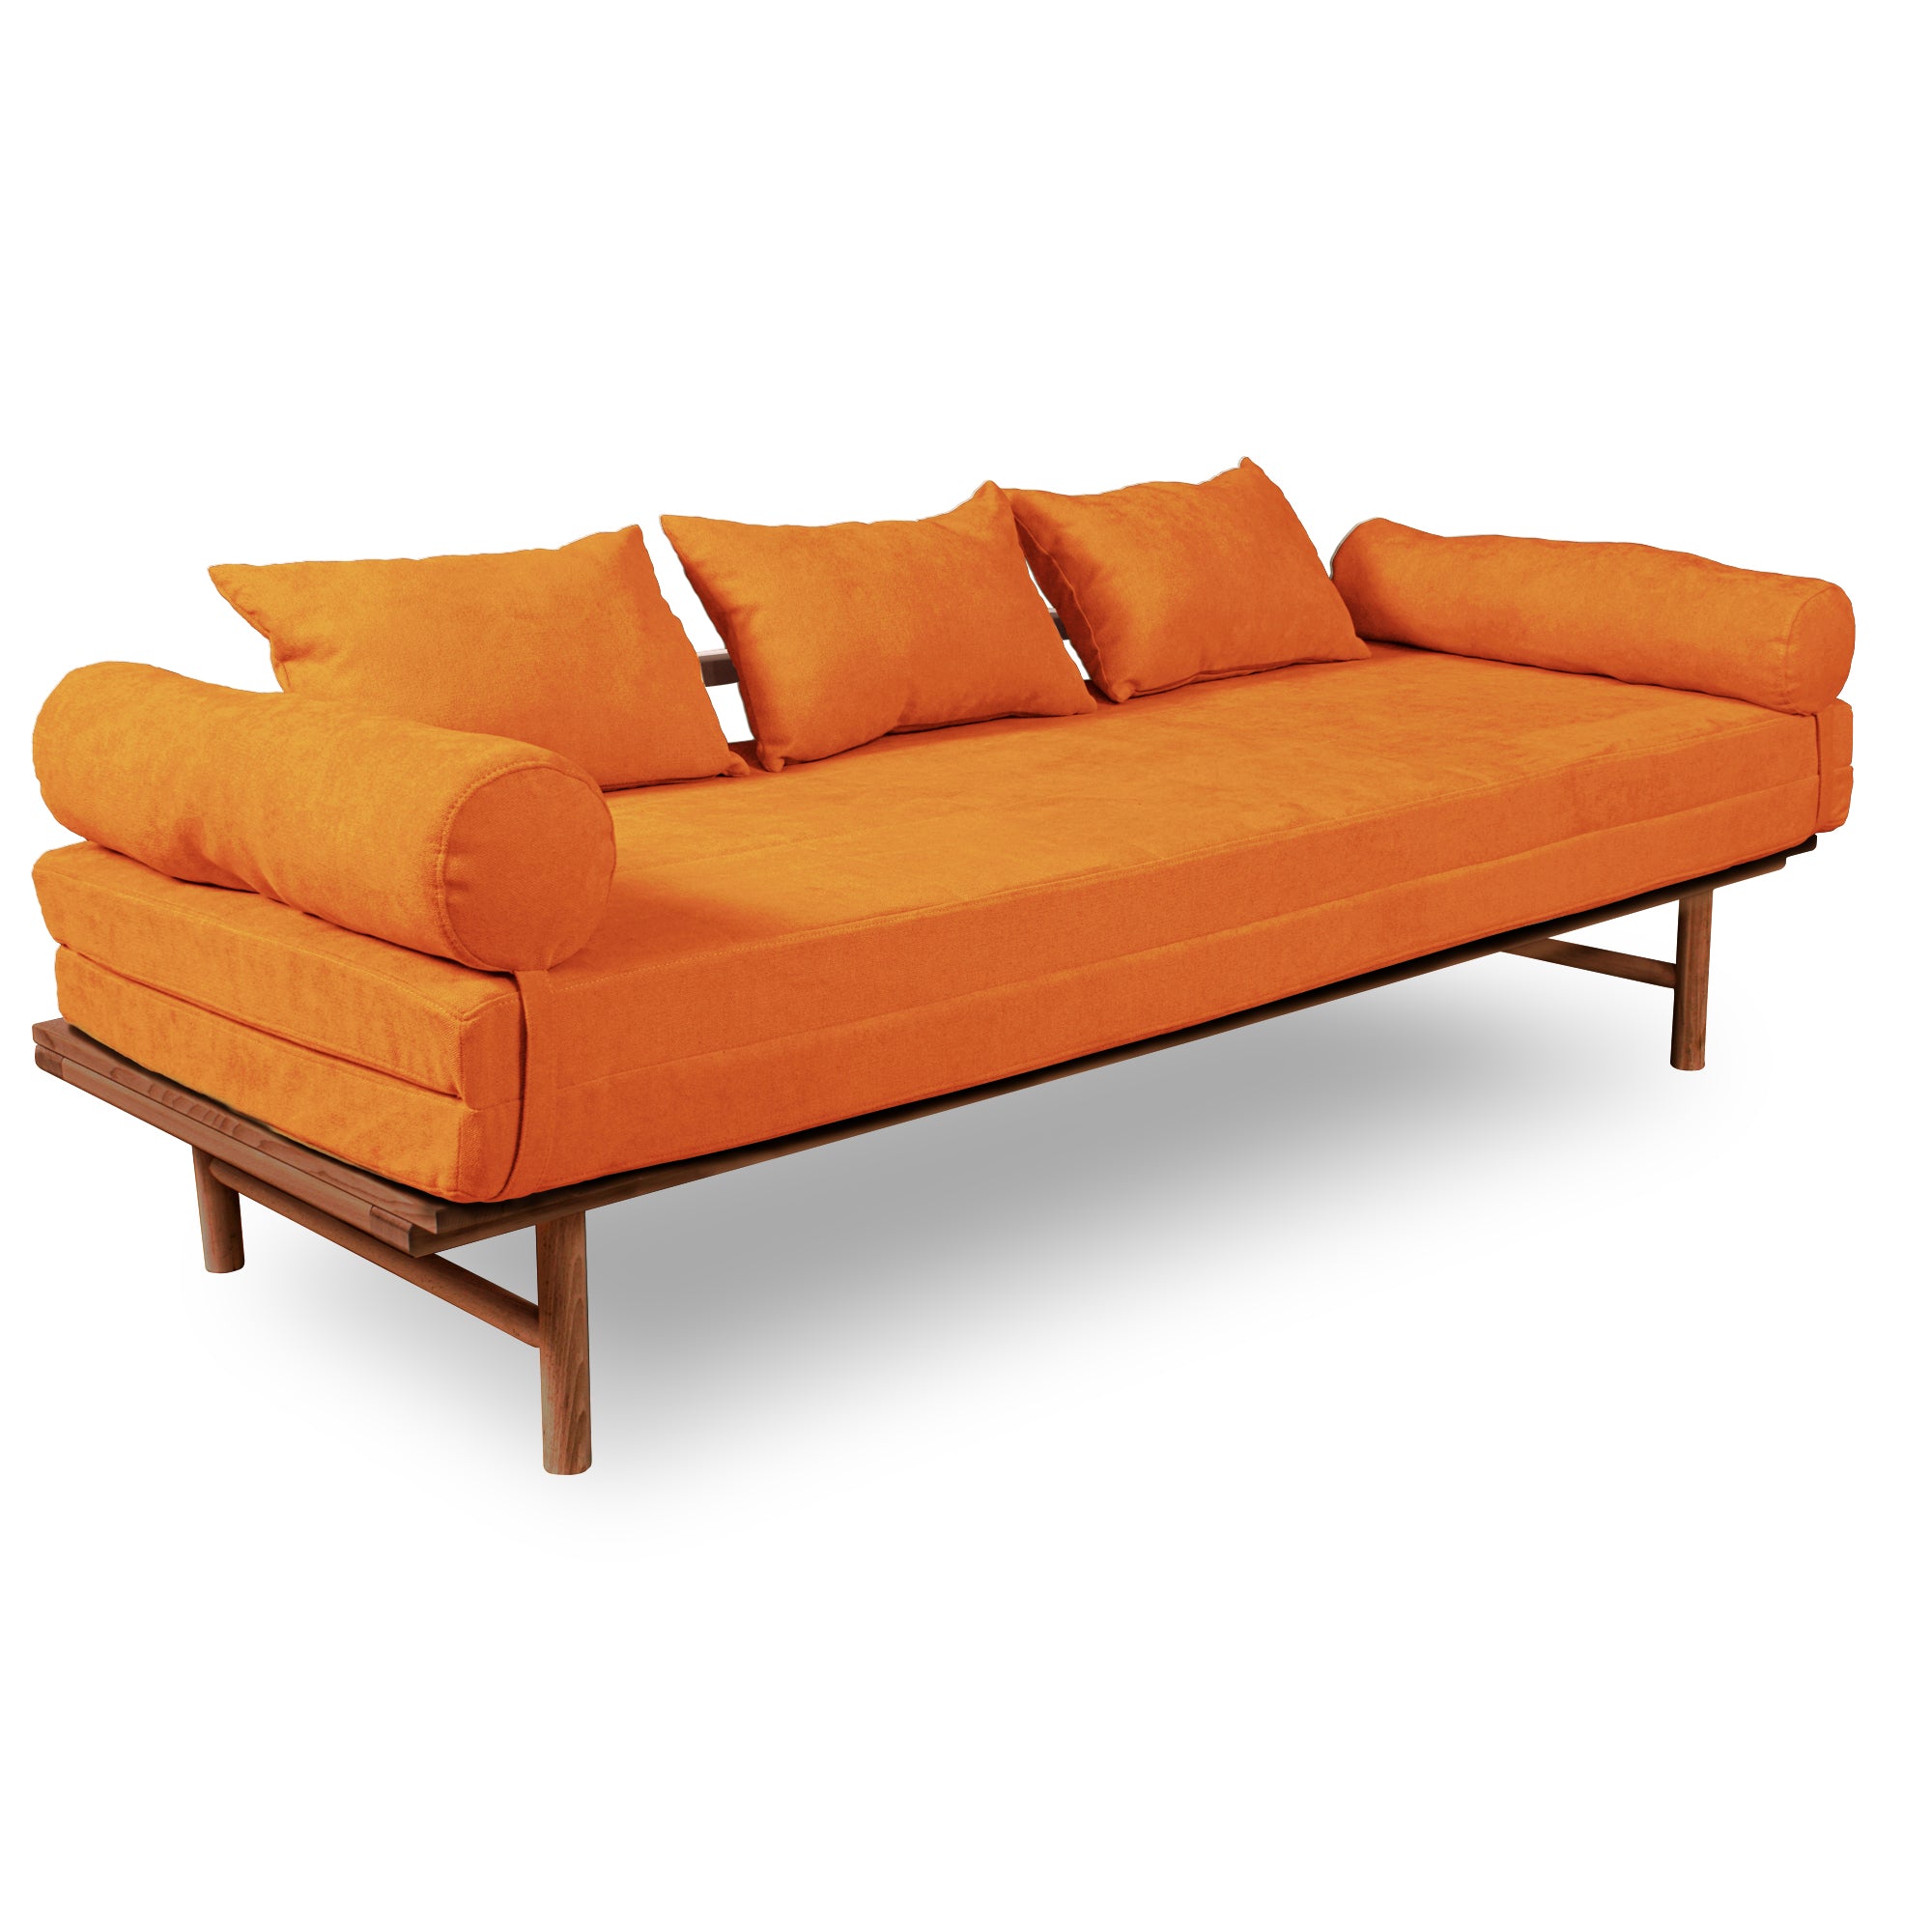 Le MAR Folding Daybed, Beech Wood Frame, Caramel Colour-orange upholstery